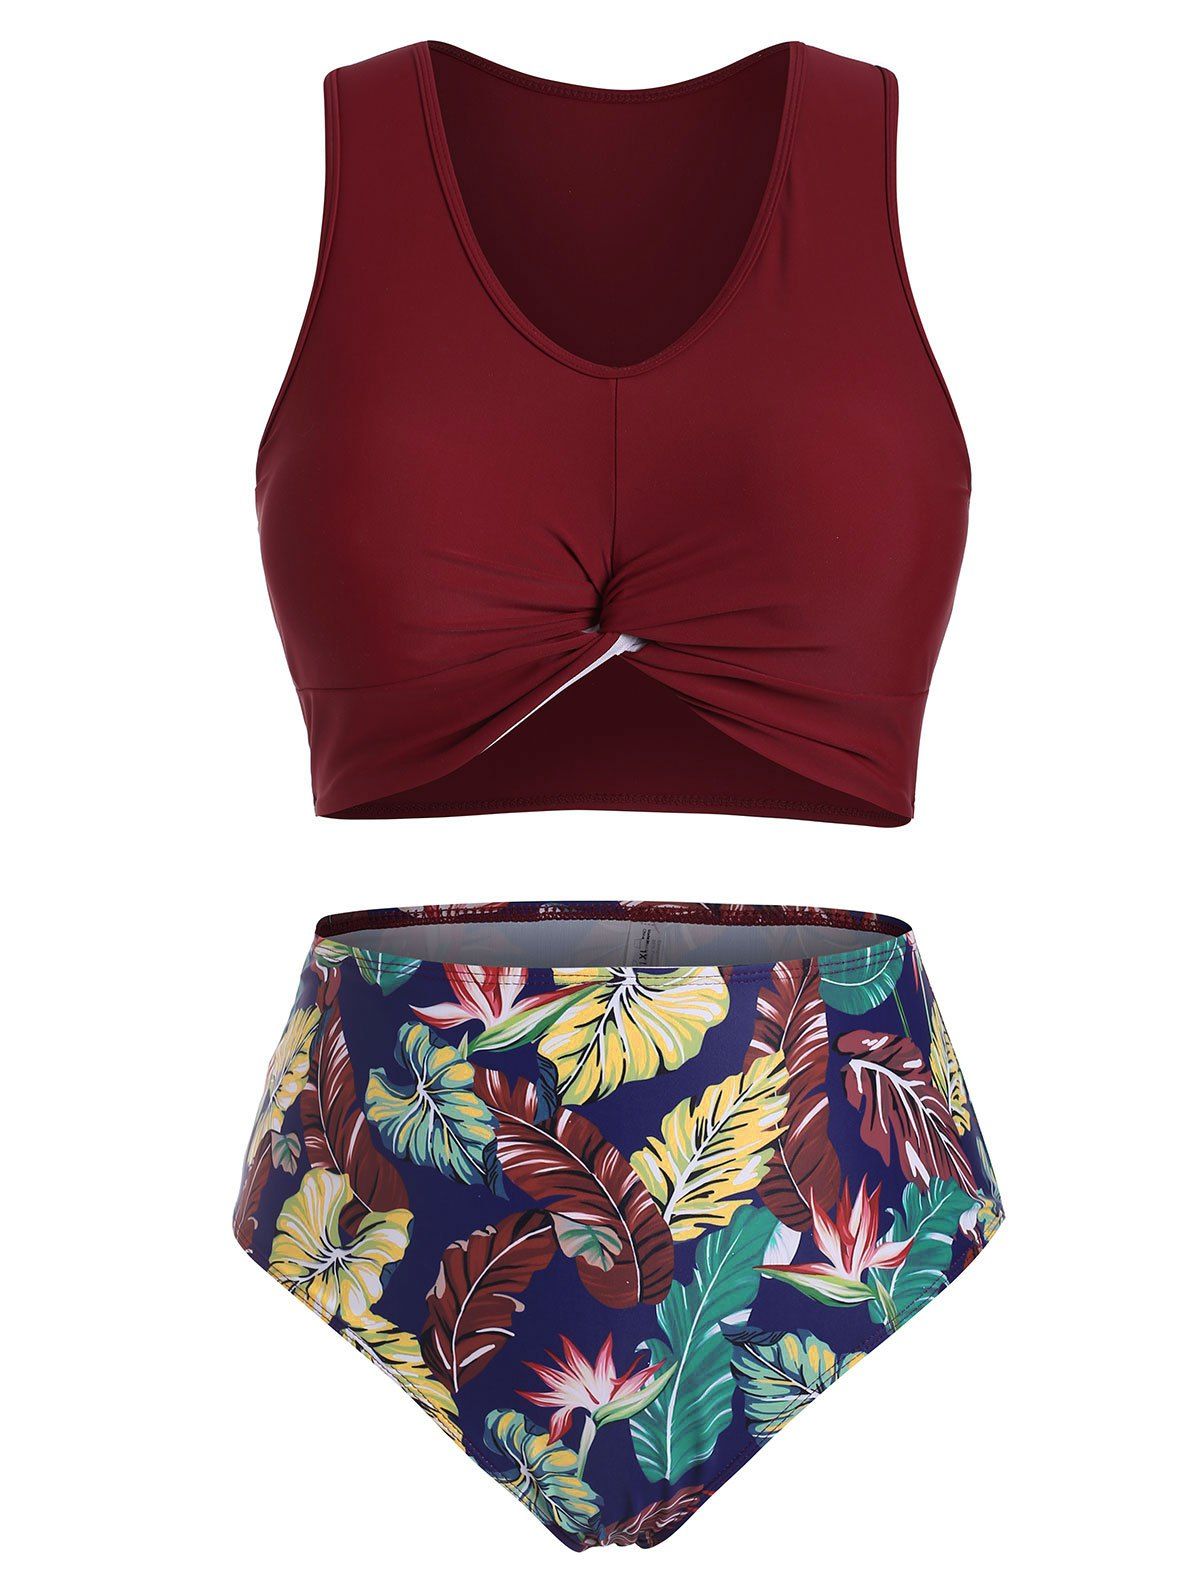 Twist Hem Flamingo Leaves Print Plus Size Tankini Swimsuit - RED WINE 4X